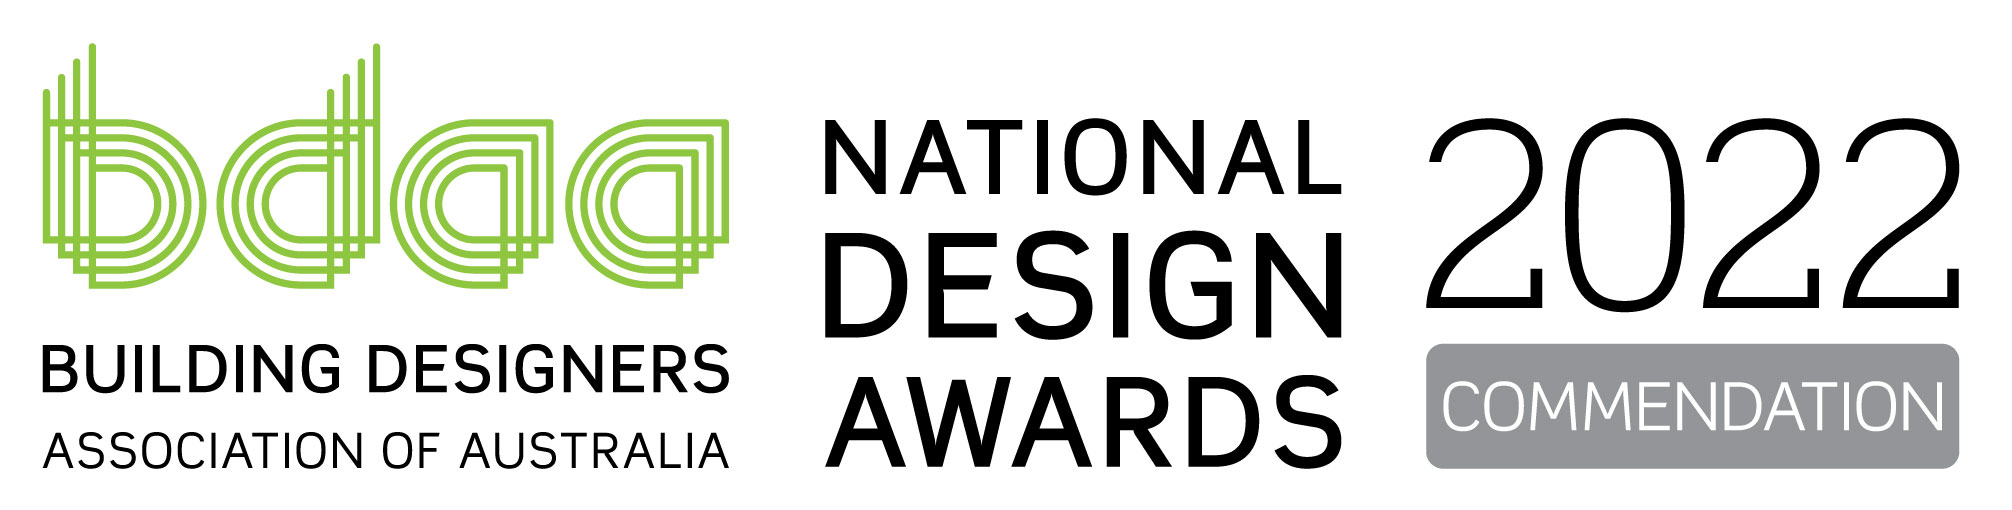 BDAA National Design Awards 2022 Commendation